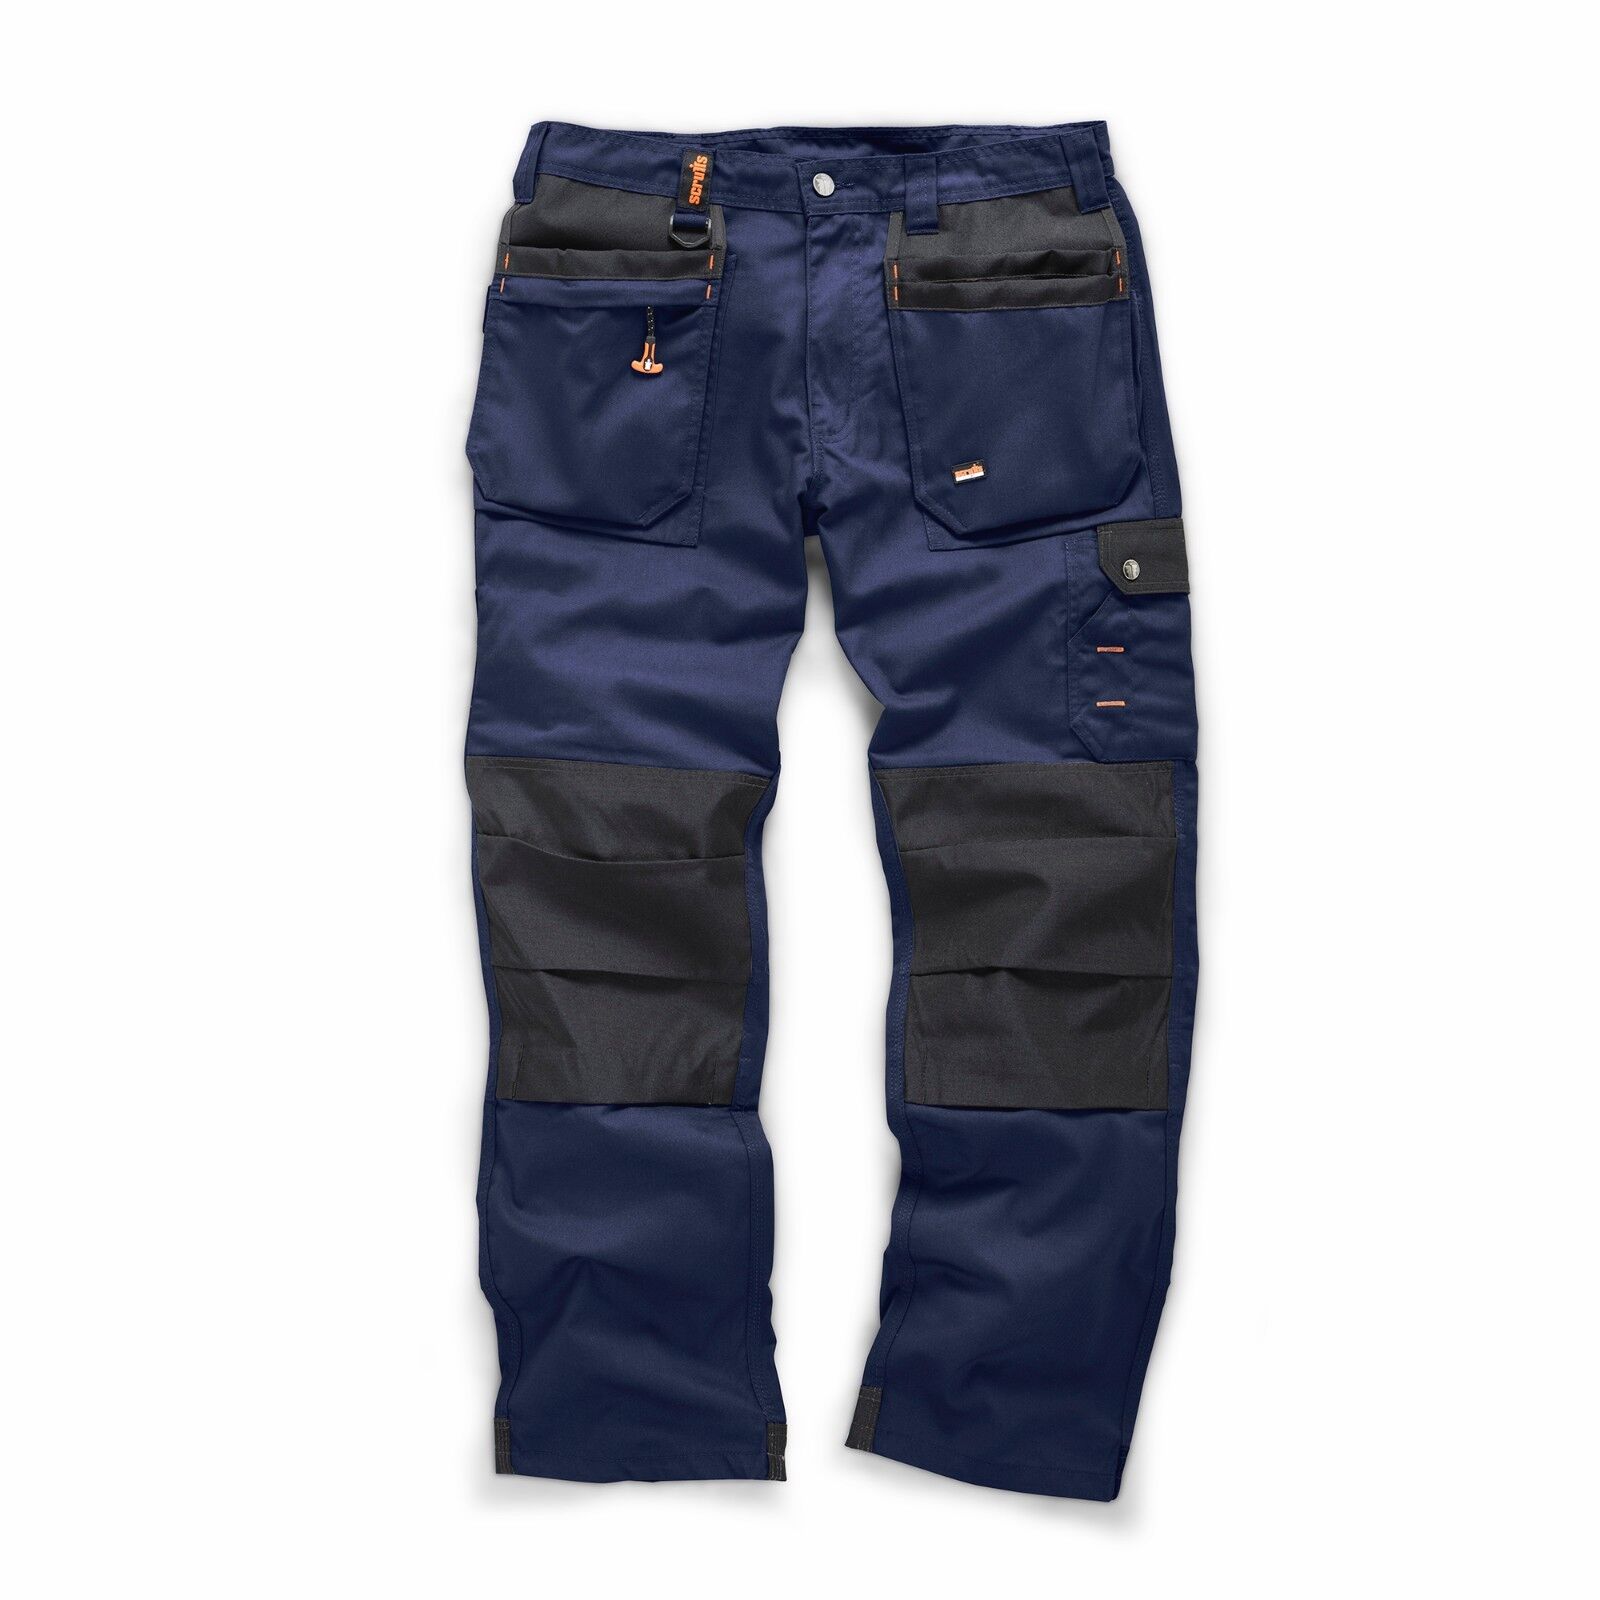 Mens Work Trousers Cargo Combat Knee Pad Pockets Black Navy Jikks Size  3240  eBay